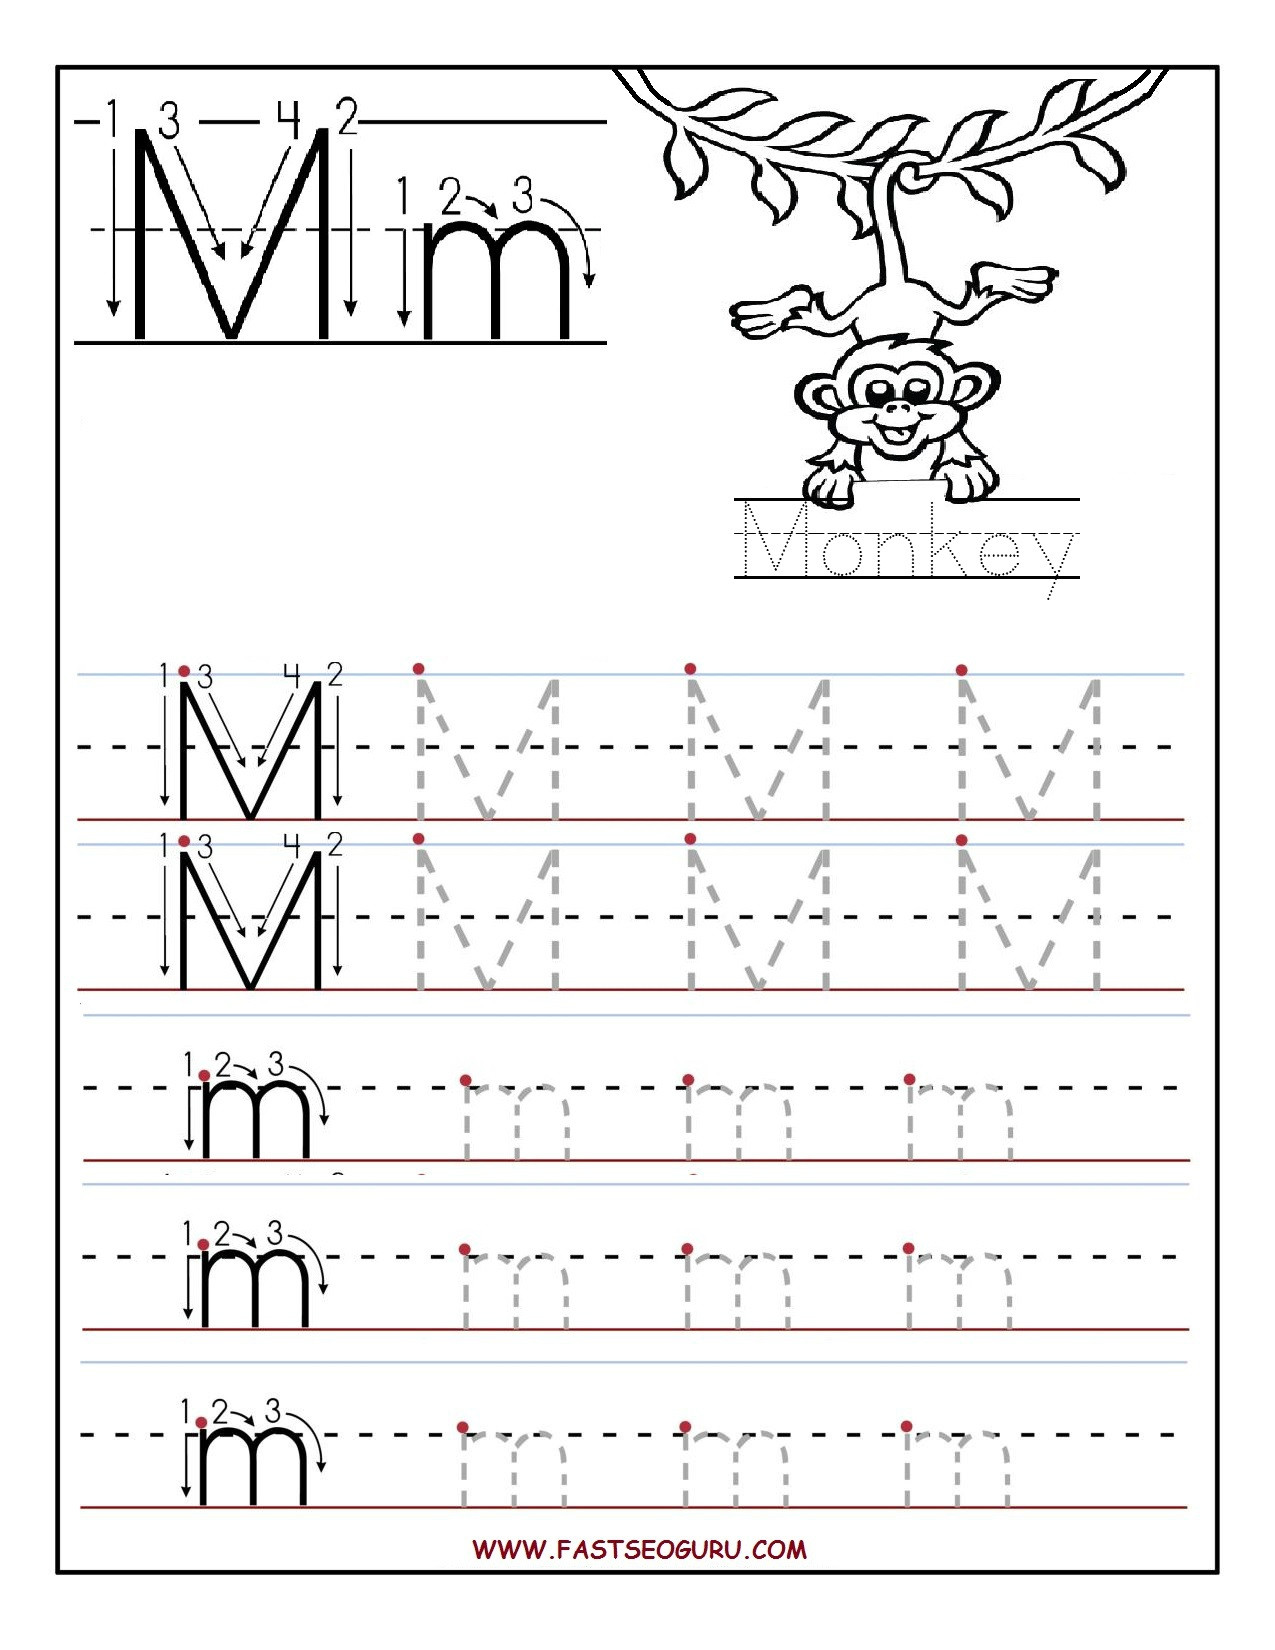 Letter M Worksheets Preschool Printable Letter M Tracing Worksheets for Preschool